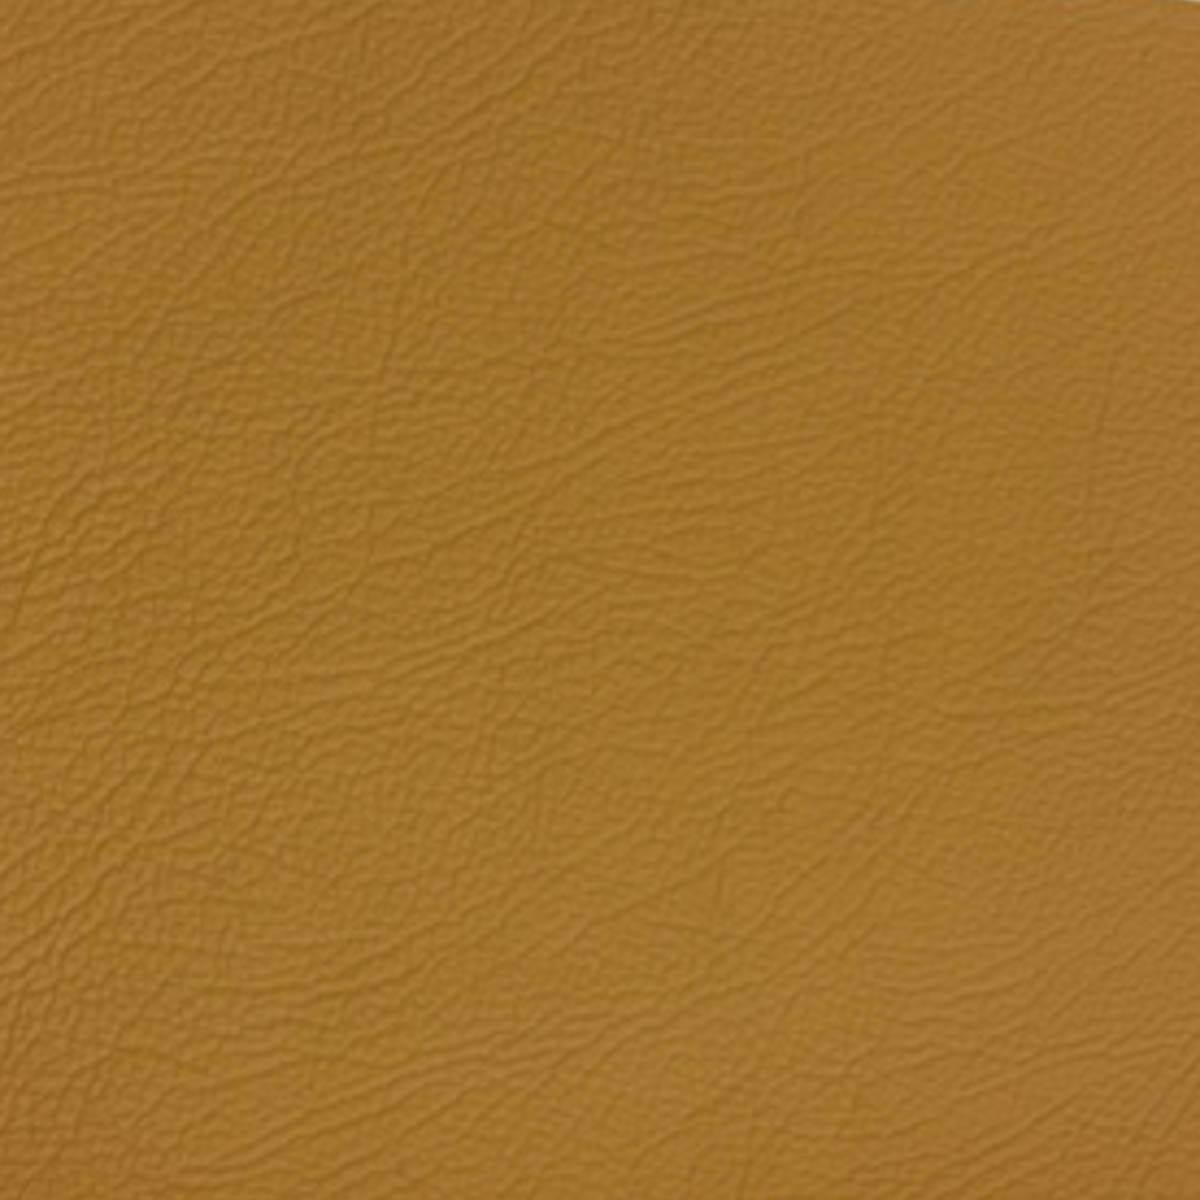 Chicane Automotive leather Sandstone